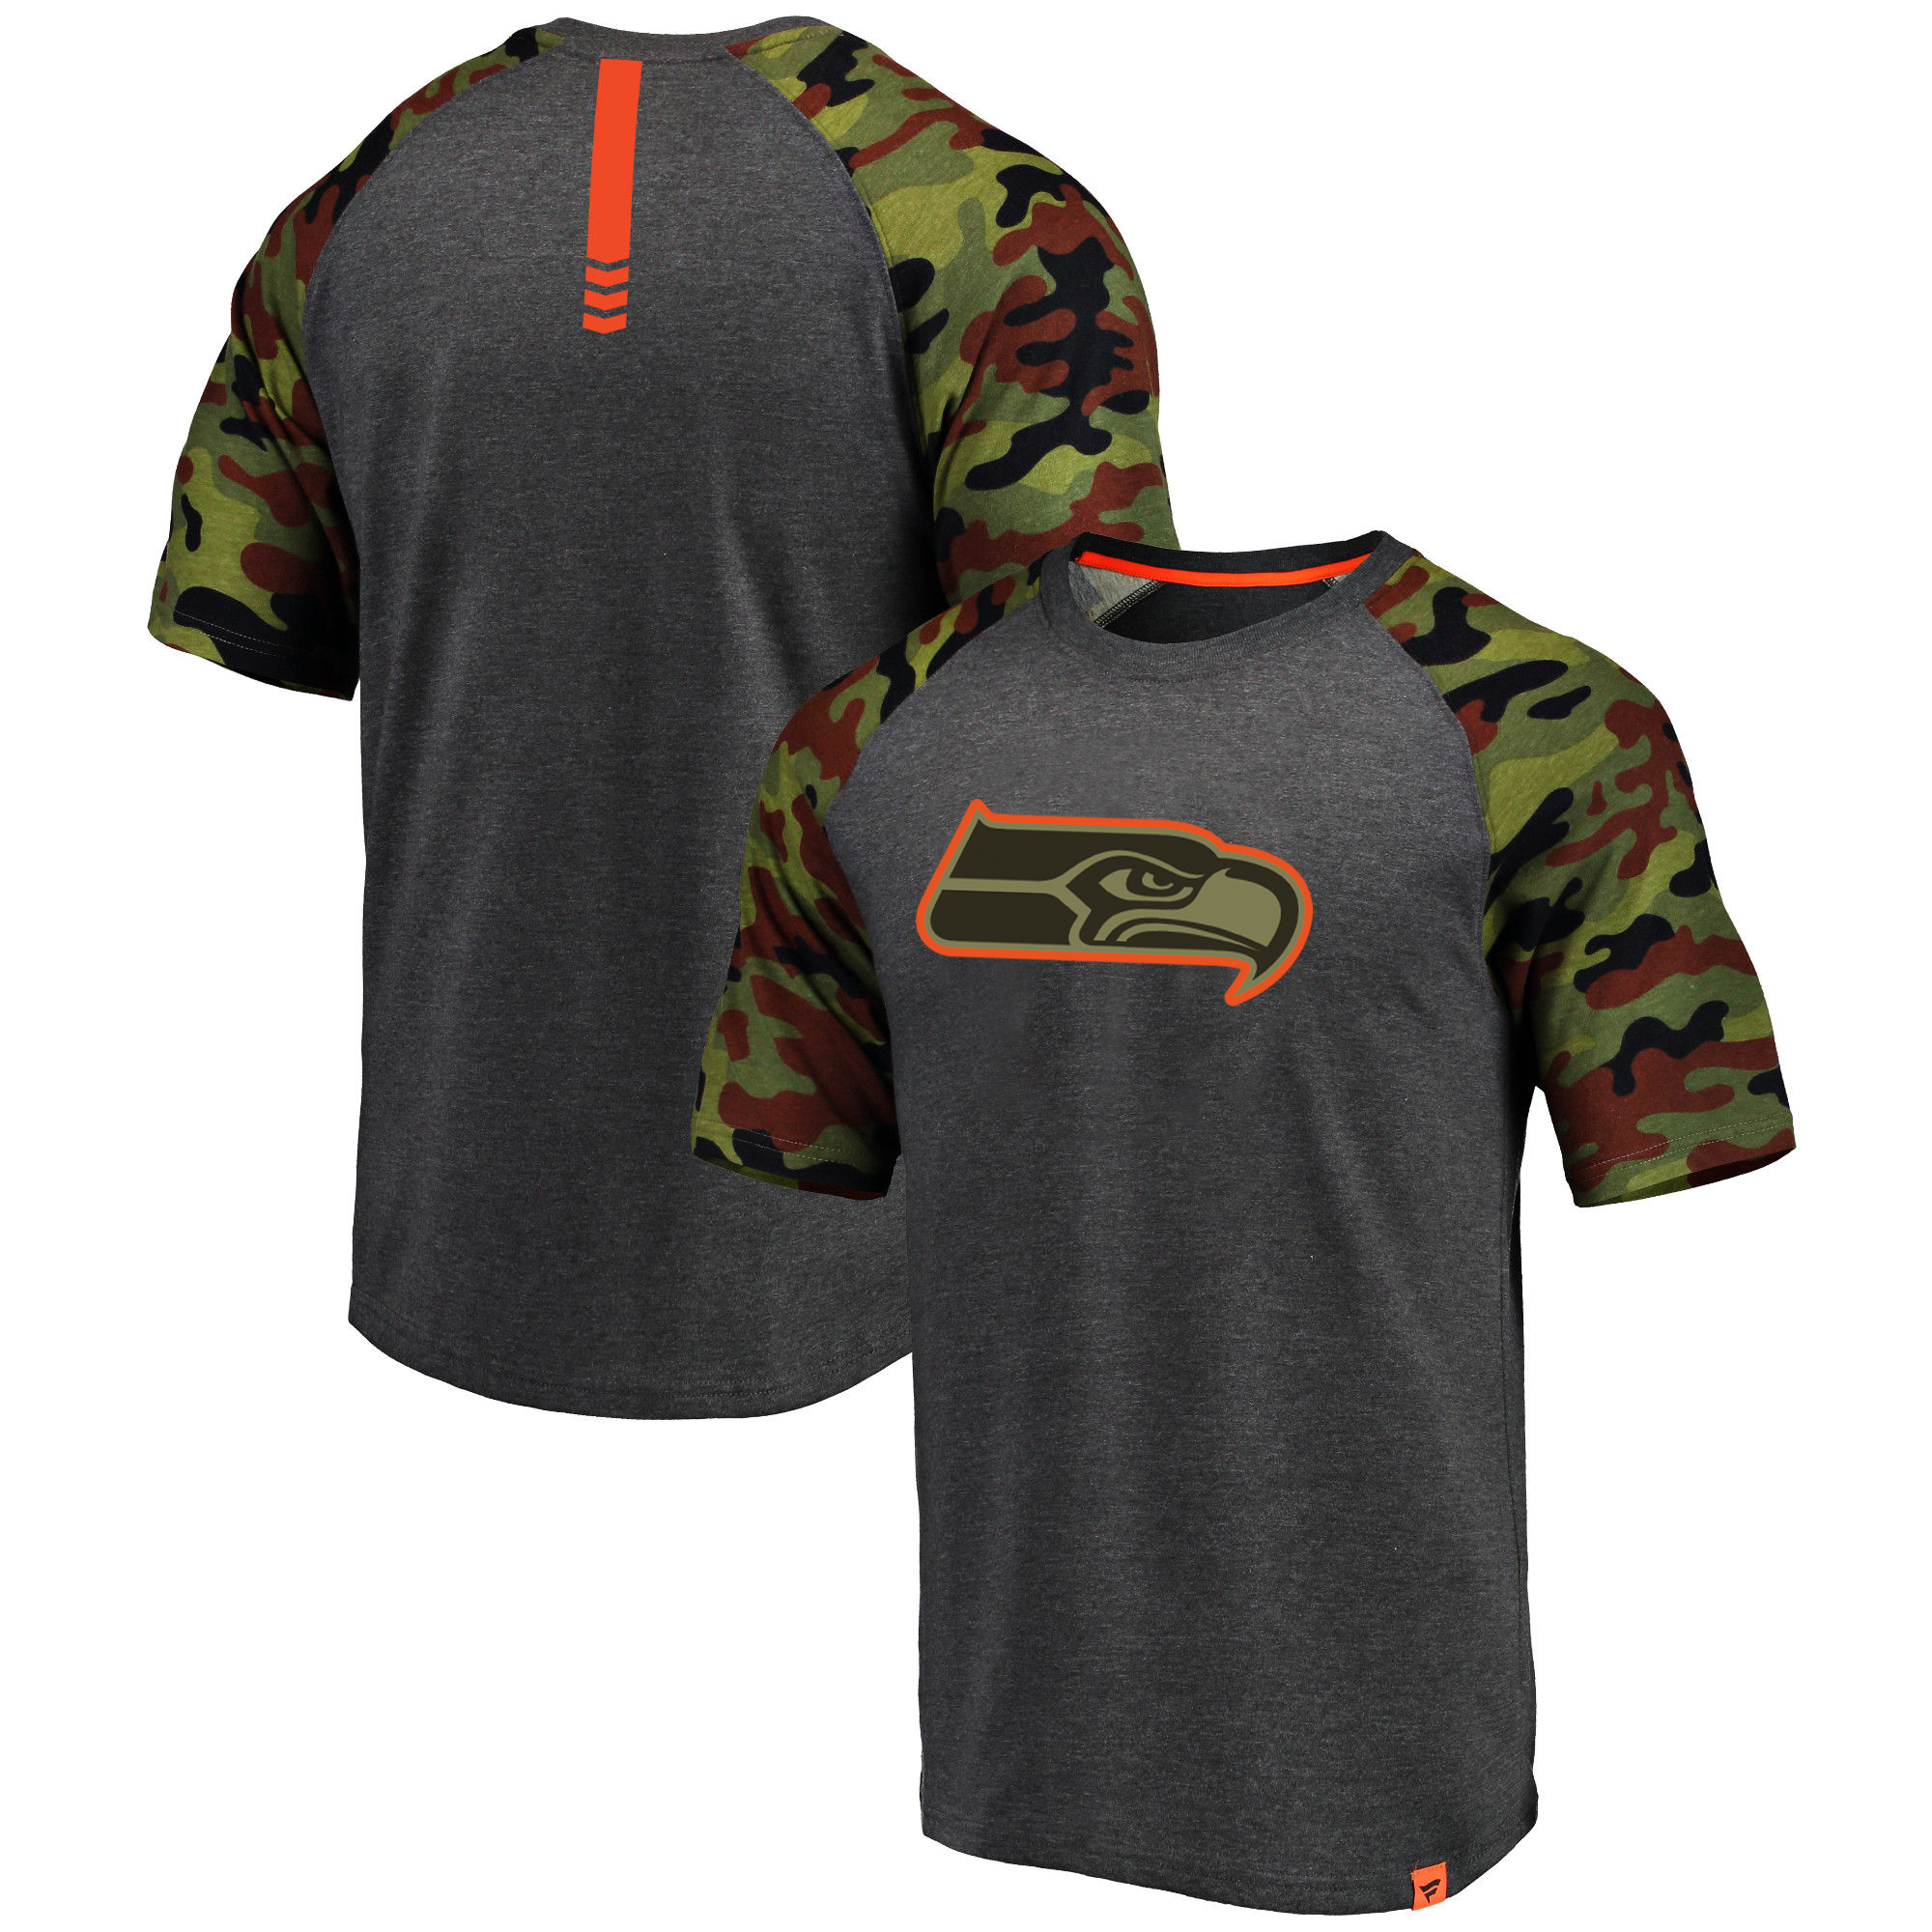 Seattle Seahawks Heathered Gray Camo NFL Pro Line by Fanatics Branded T-Shirt